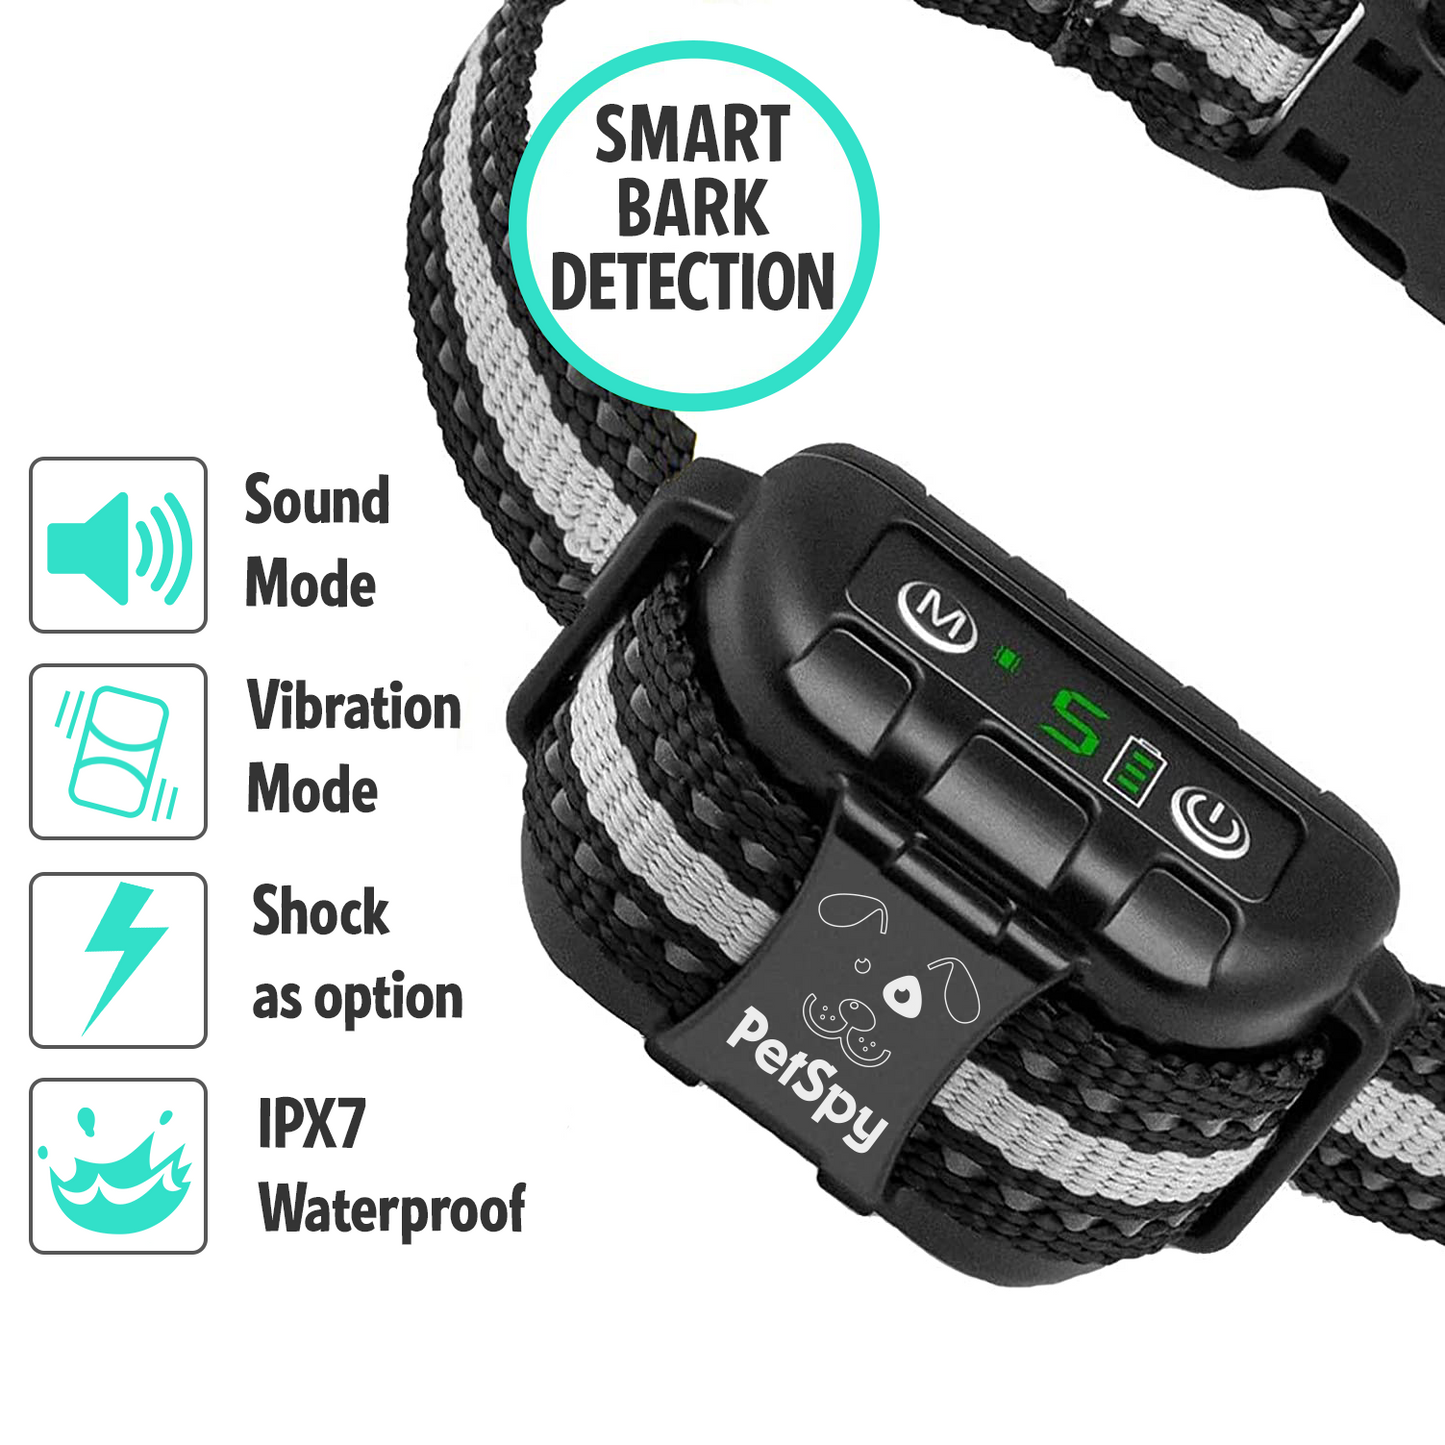 smart dog bark control, smart bark detection: sound mode, vibration mode, shock as option, IPX7 waterproof